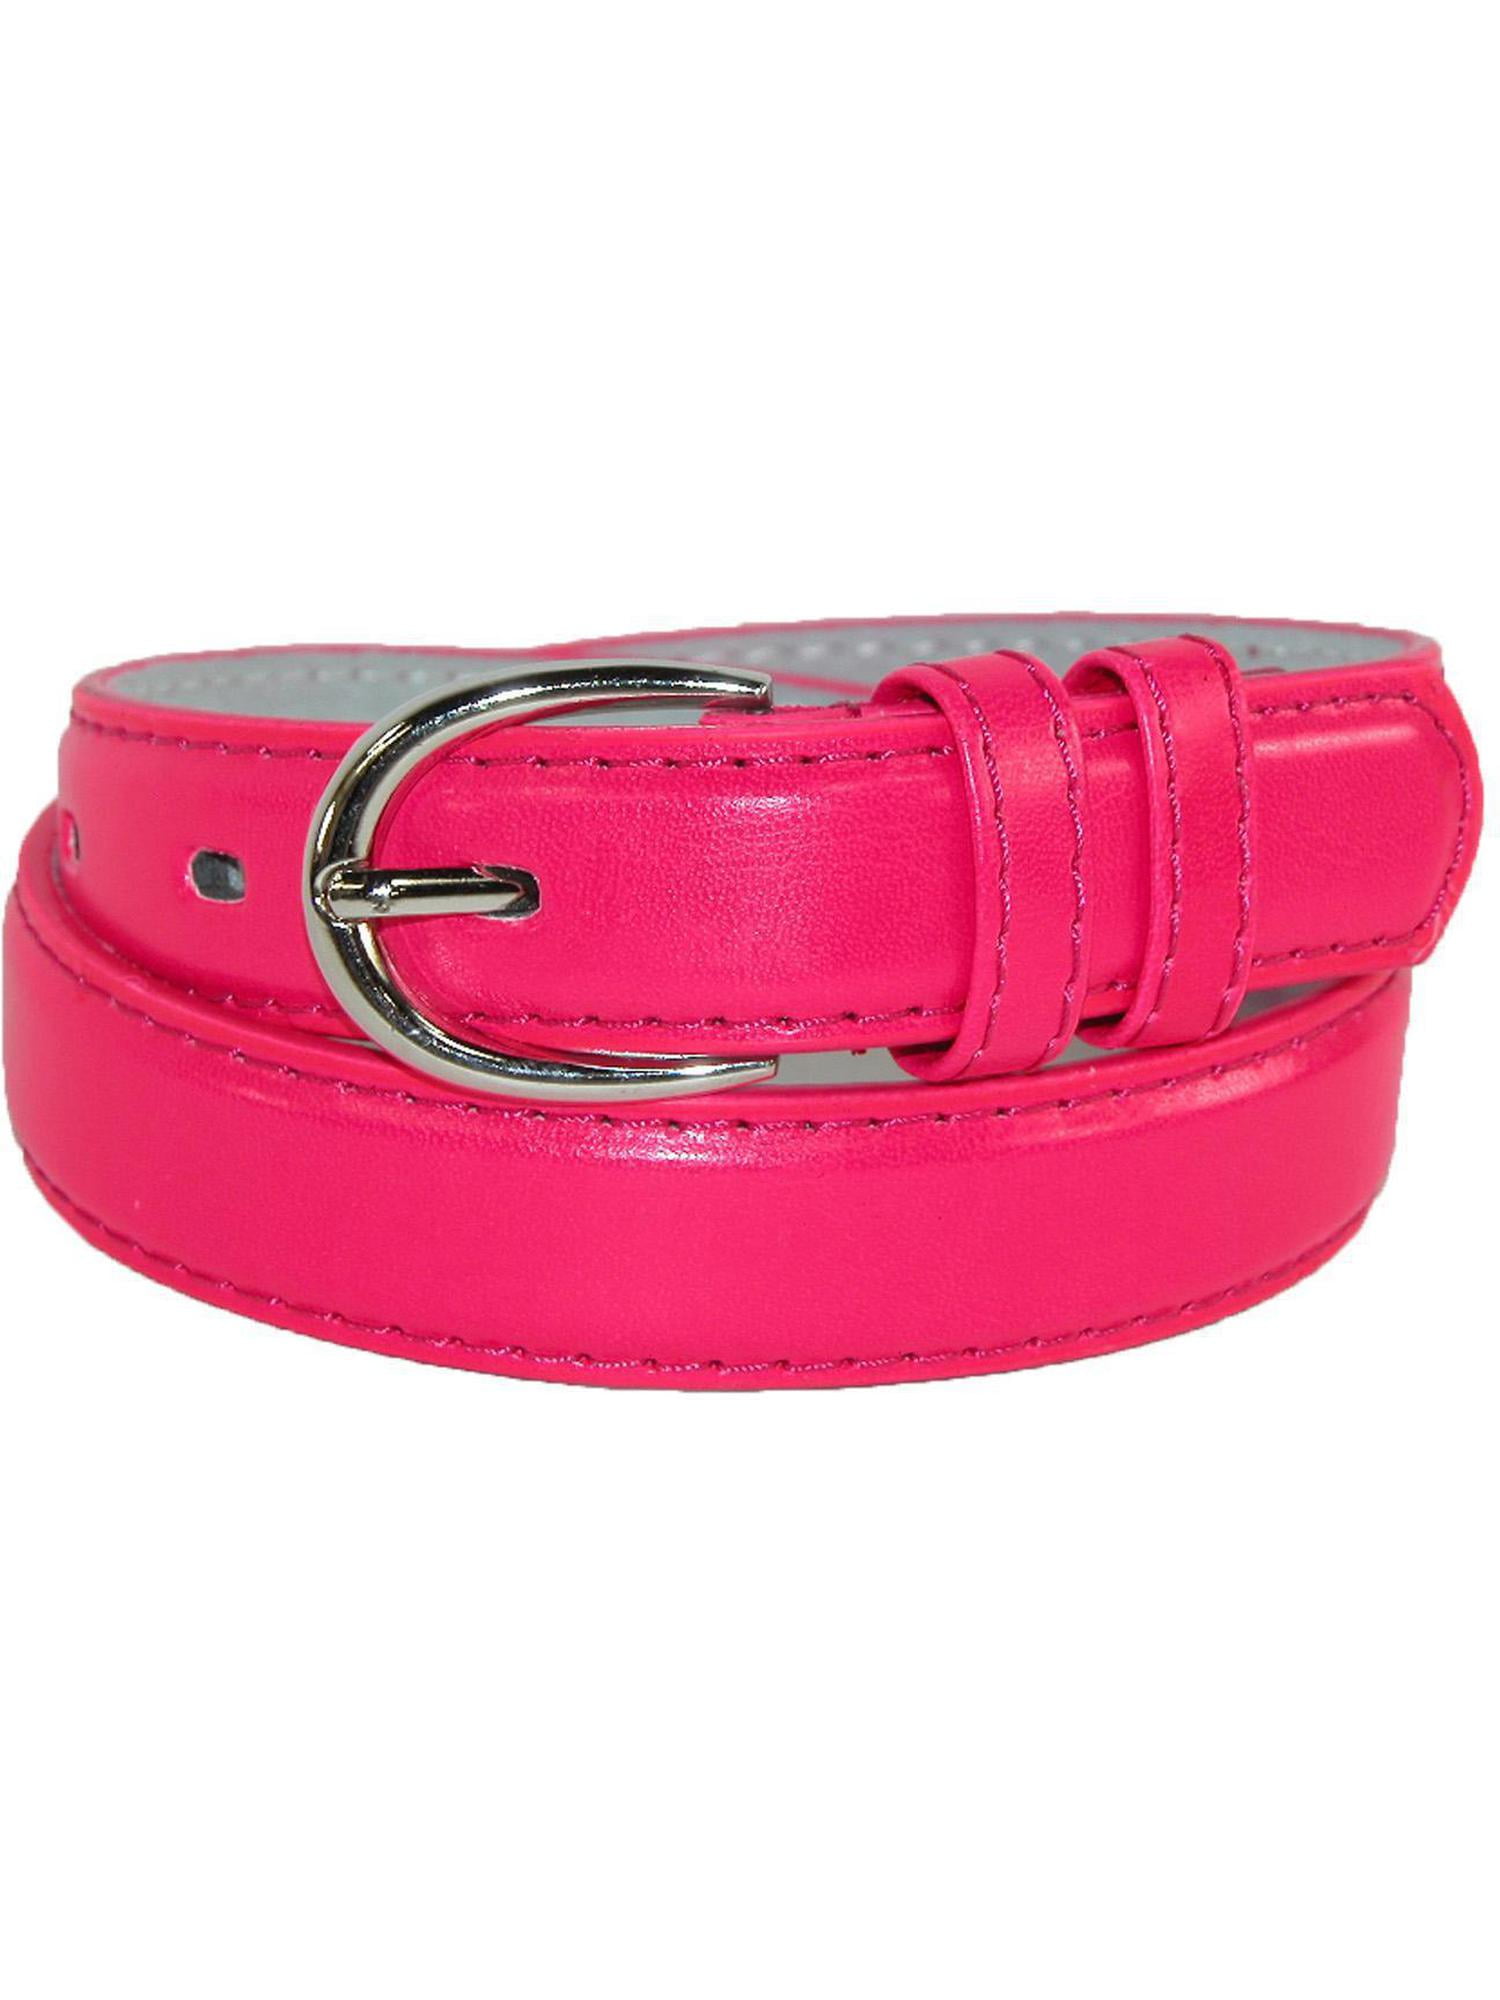 CTM - Size Medium Girls Leather 3/4 inch Basic Dress Belt, Hot Pink ...